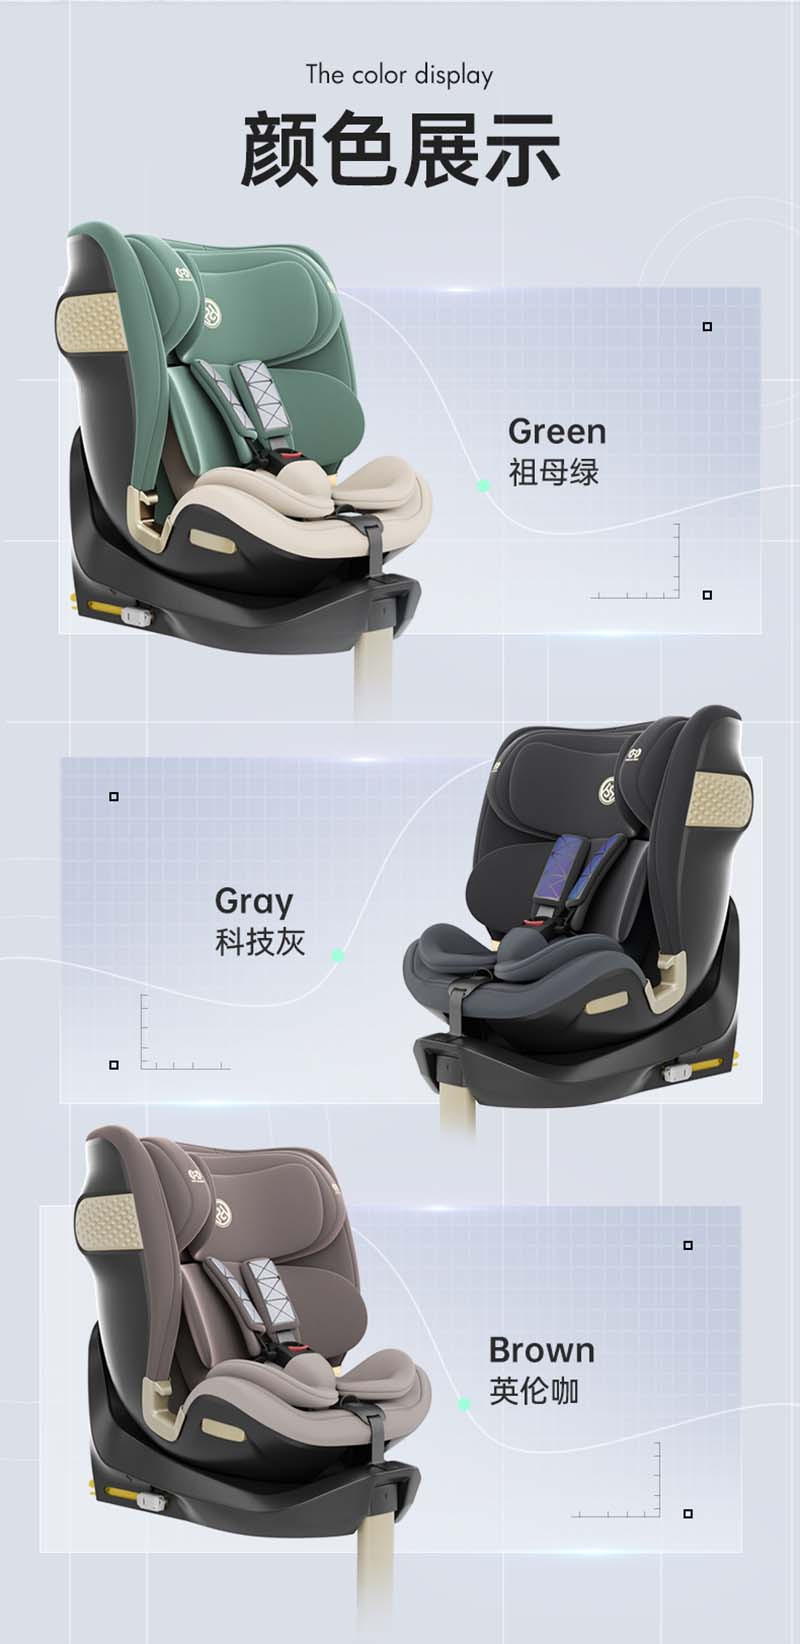 Pouch（帛琦）KS36 儿童汽车安全座椅